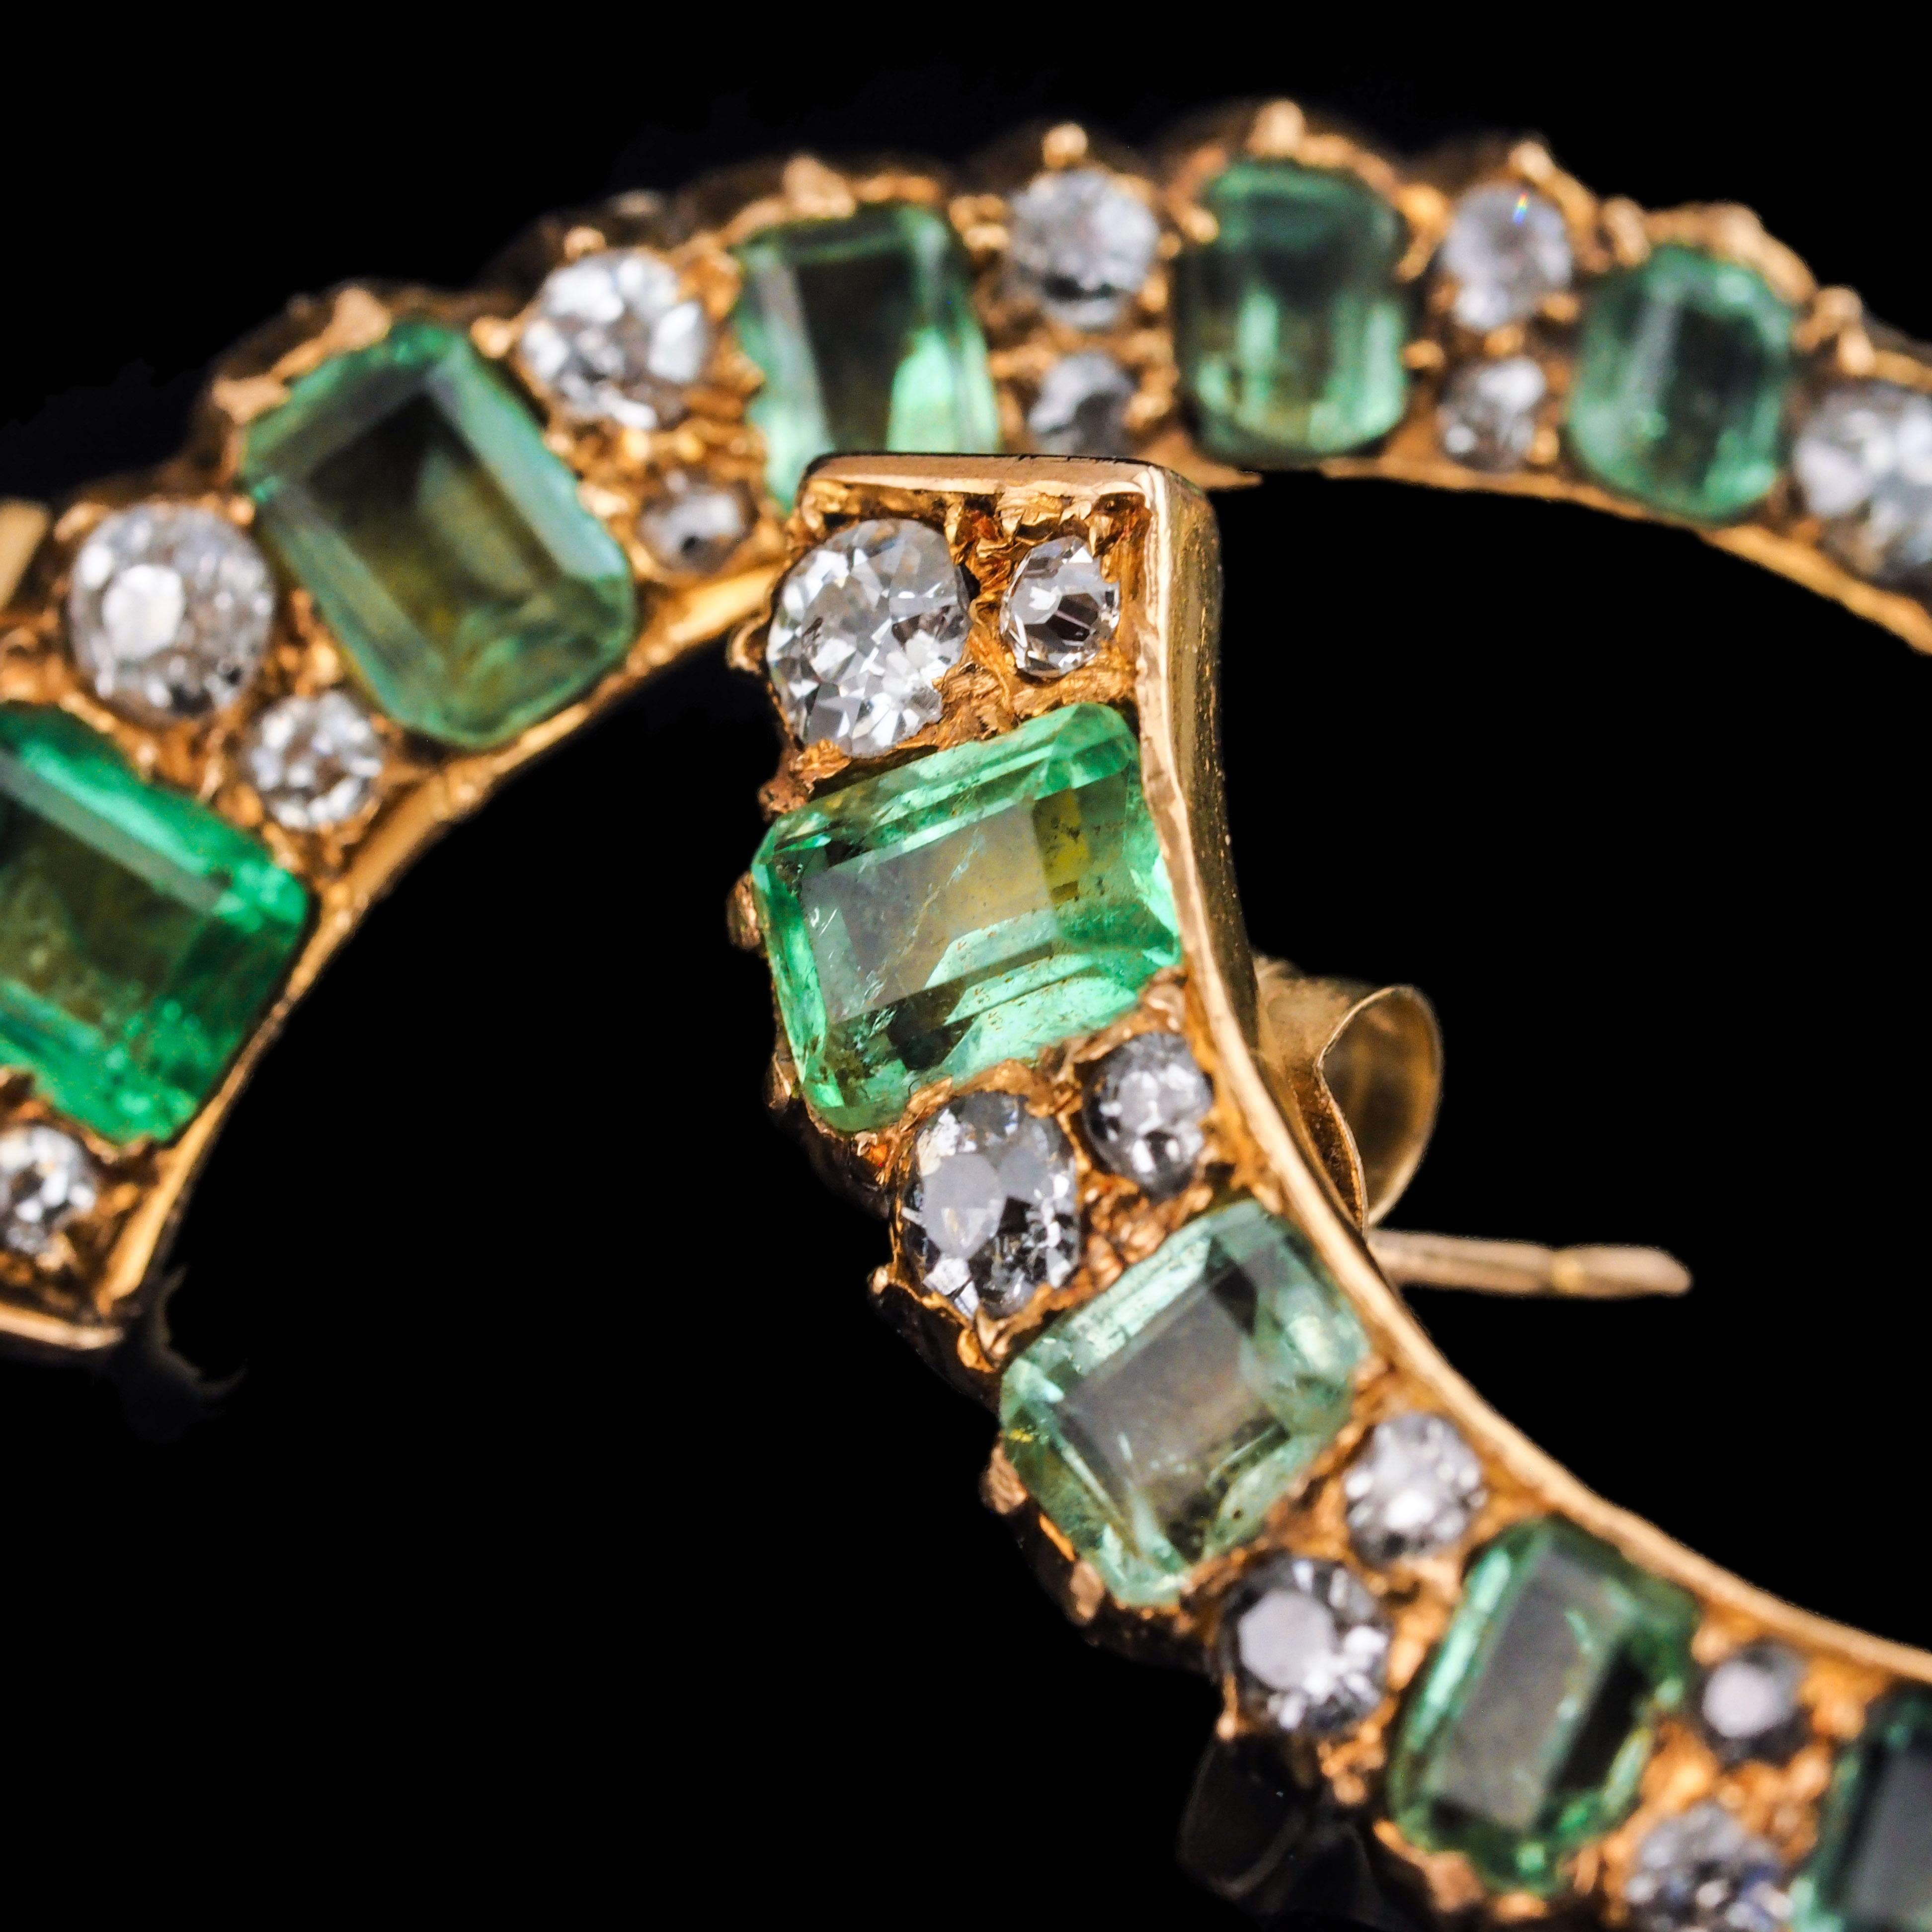 Antique Victorian Emerald & Diamond Earrings 18K Gold Crescent Design - c.1890 For Sale 2